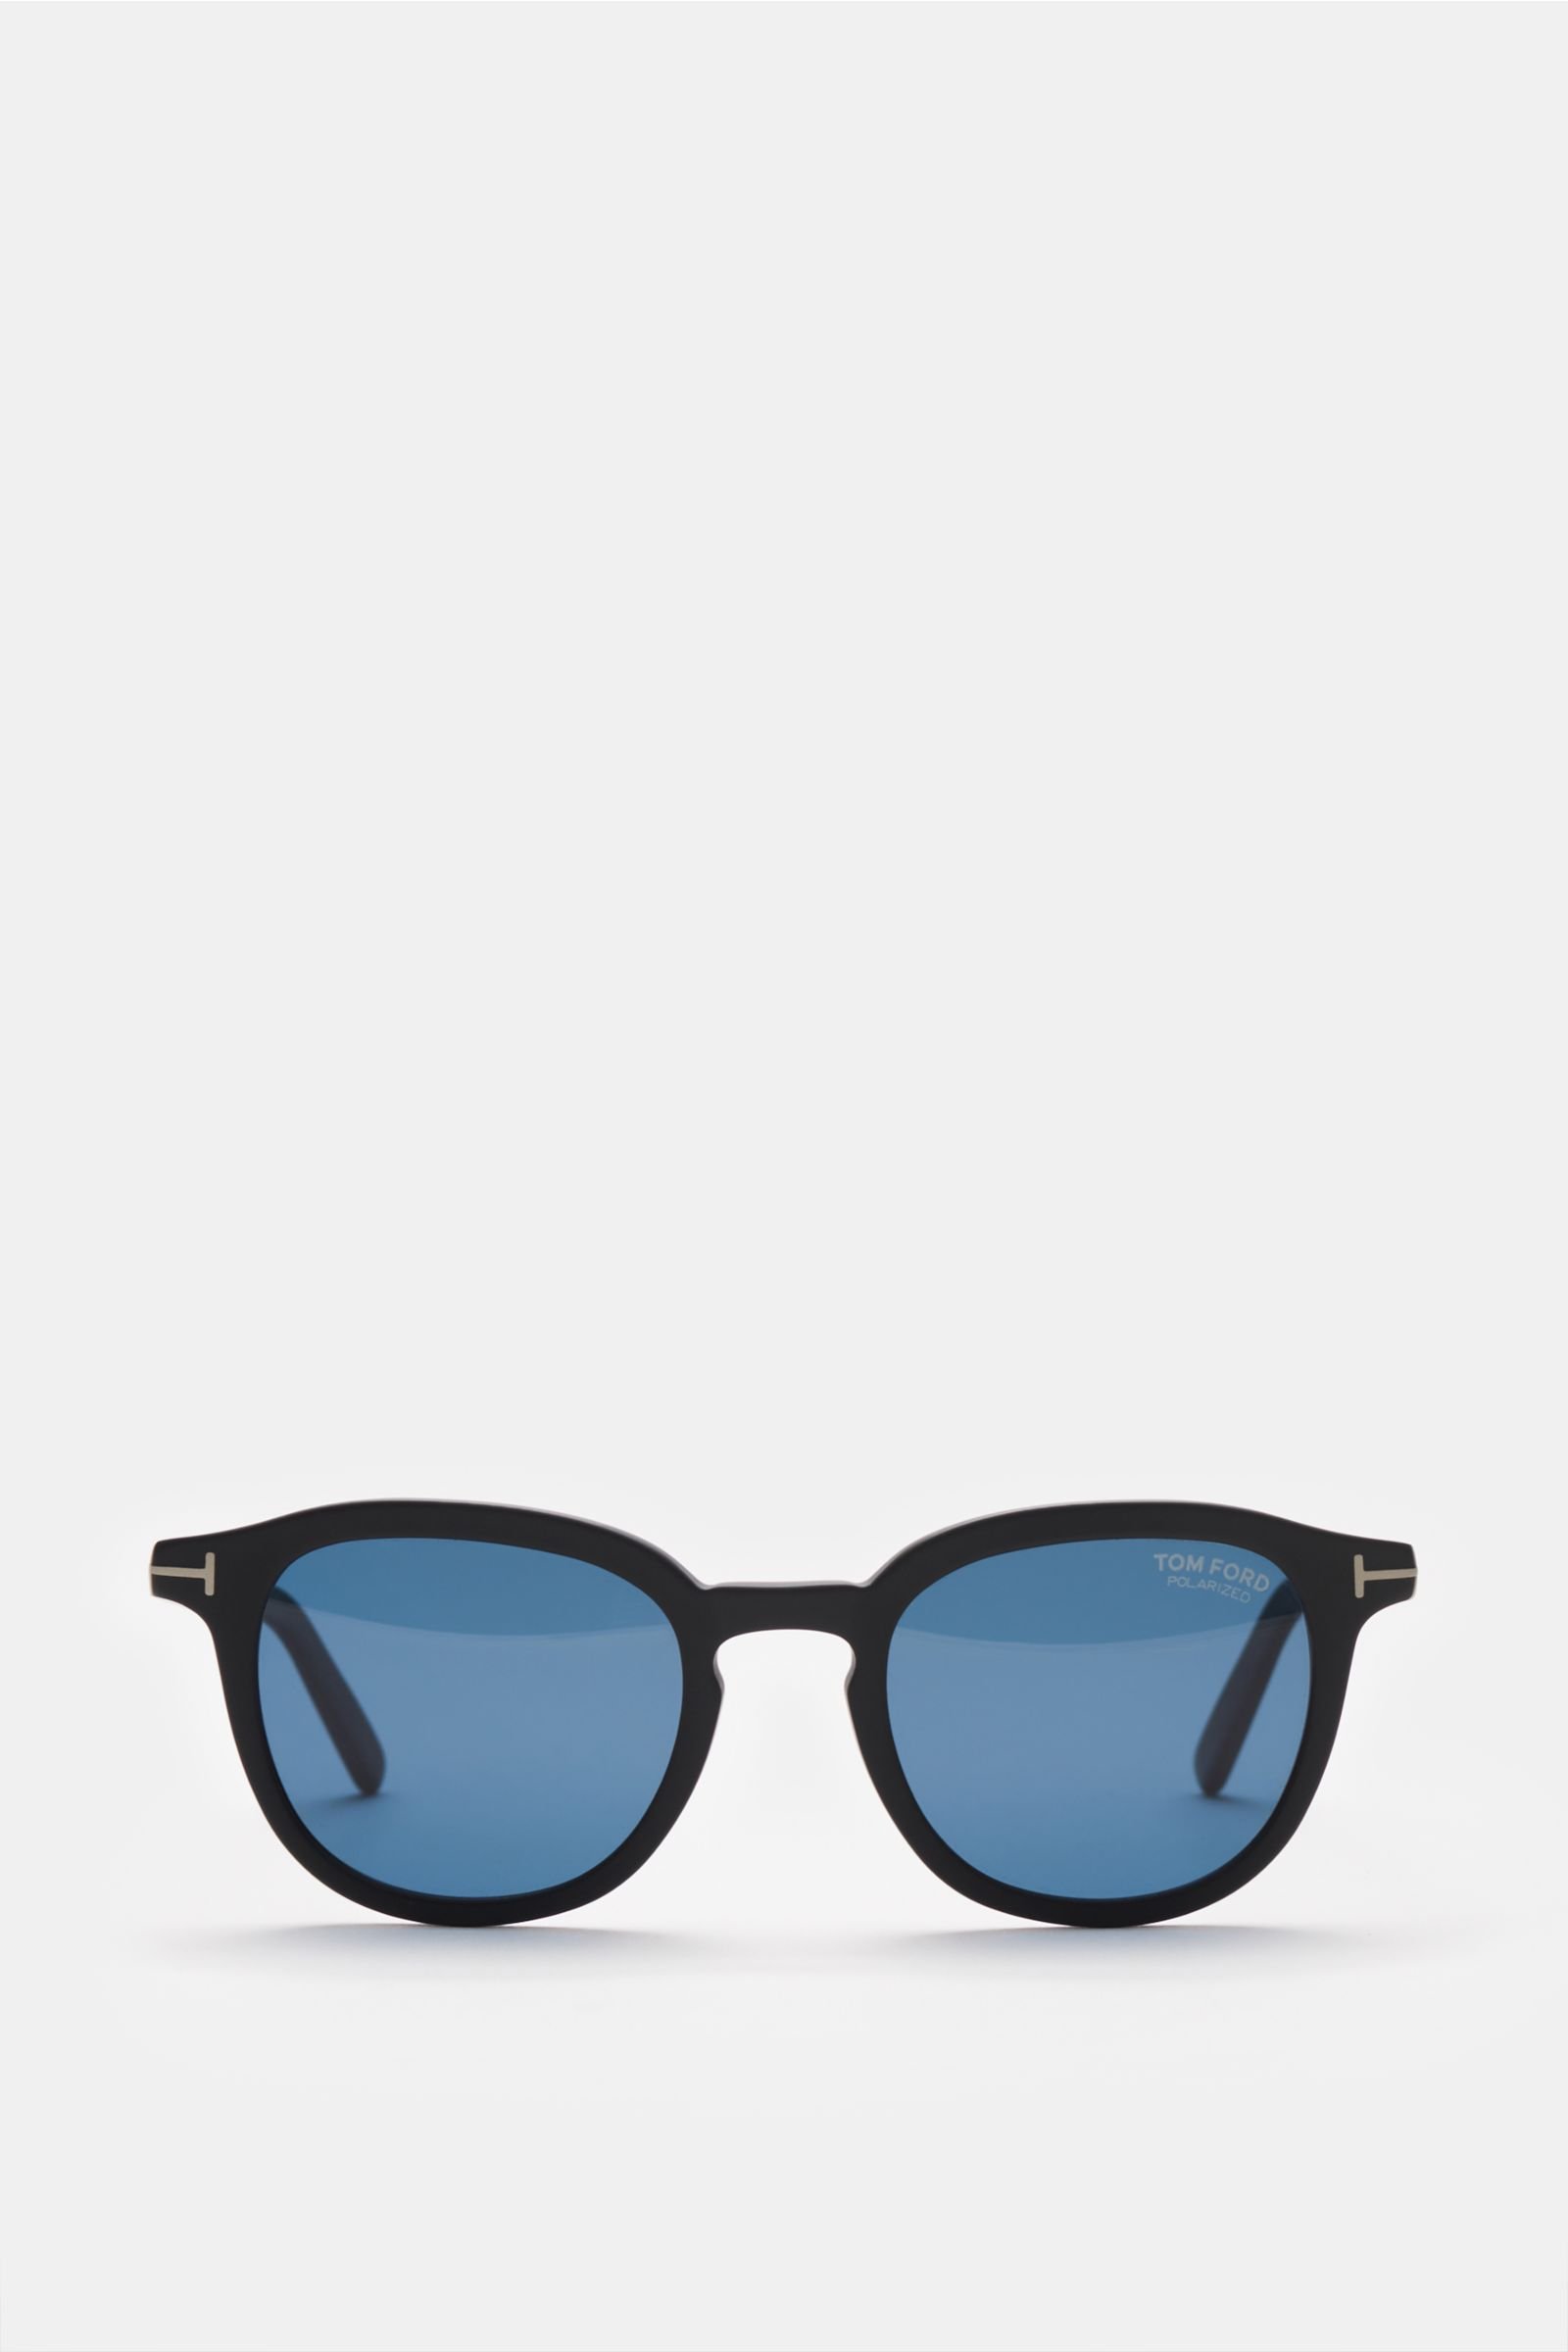 Sunglasses 'Pax' black/dark blue